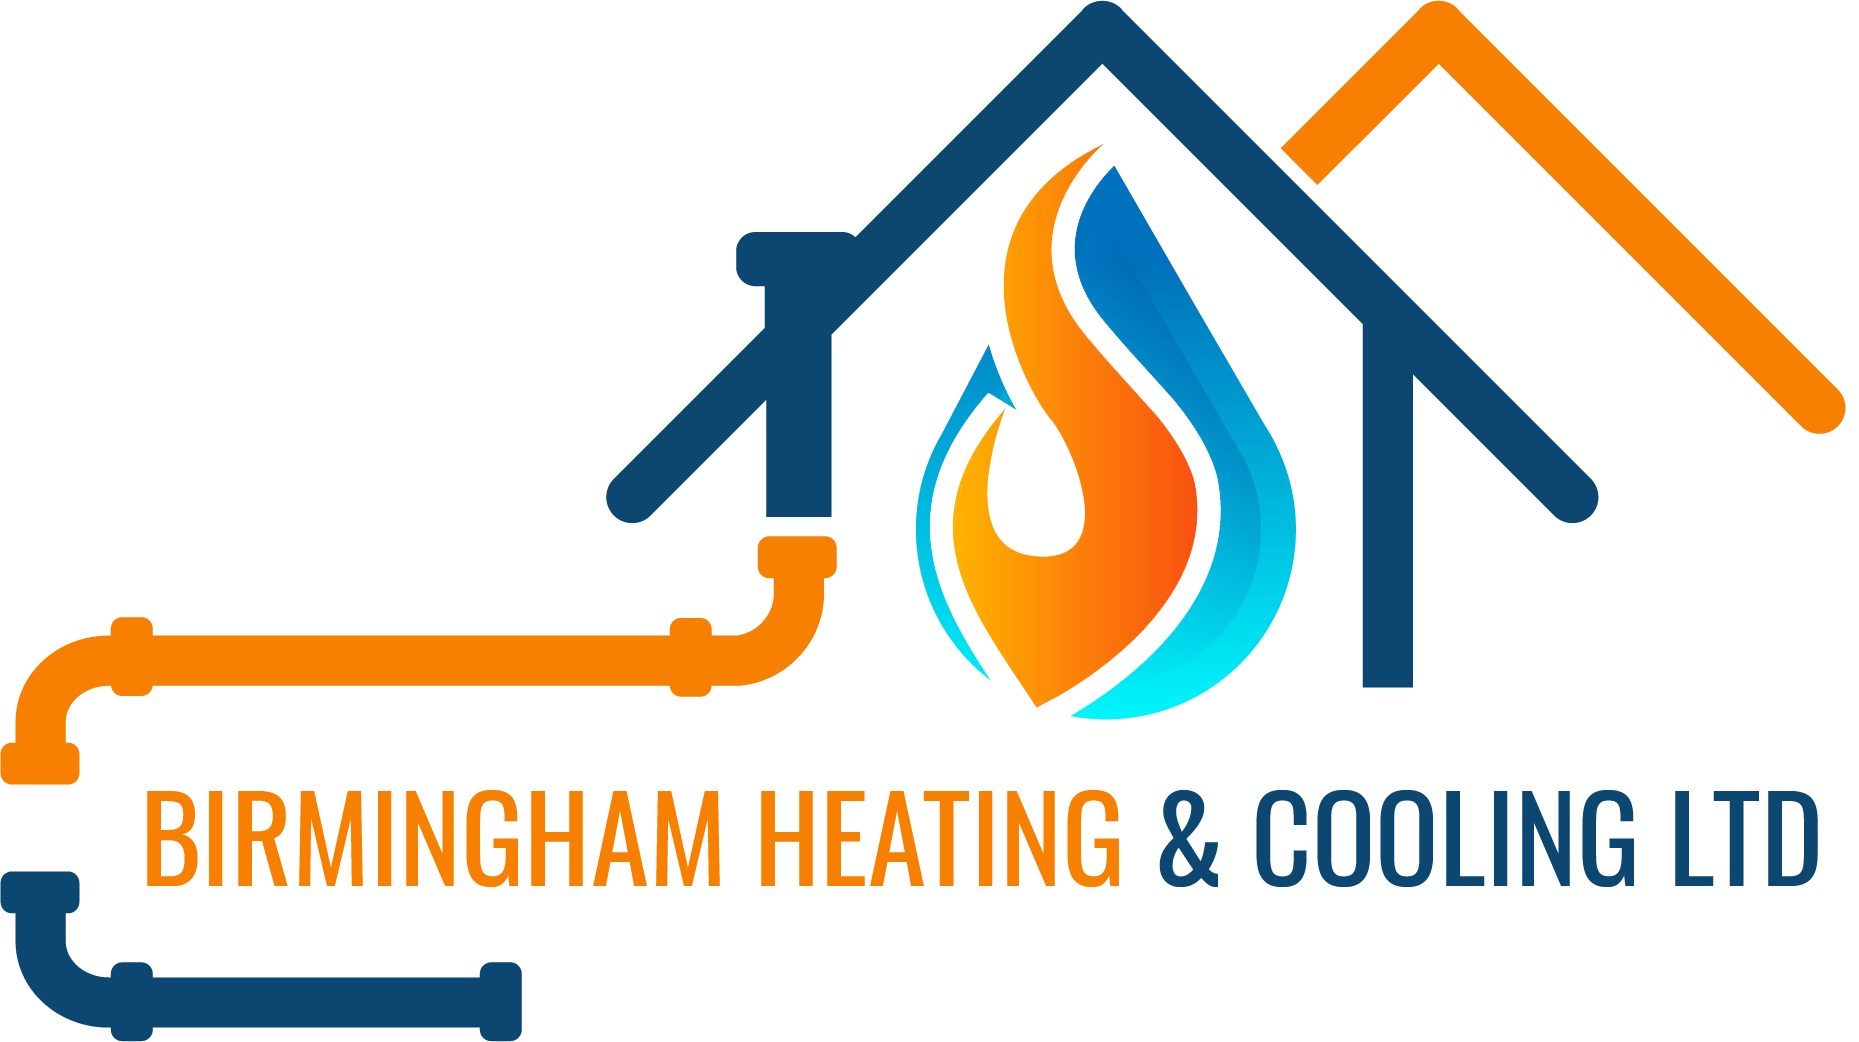 Birmingham Heating & Cooling Ltd logo